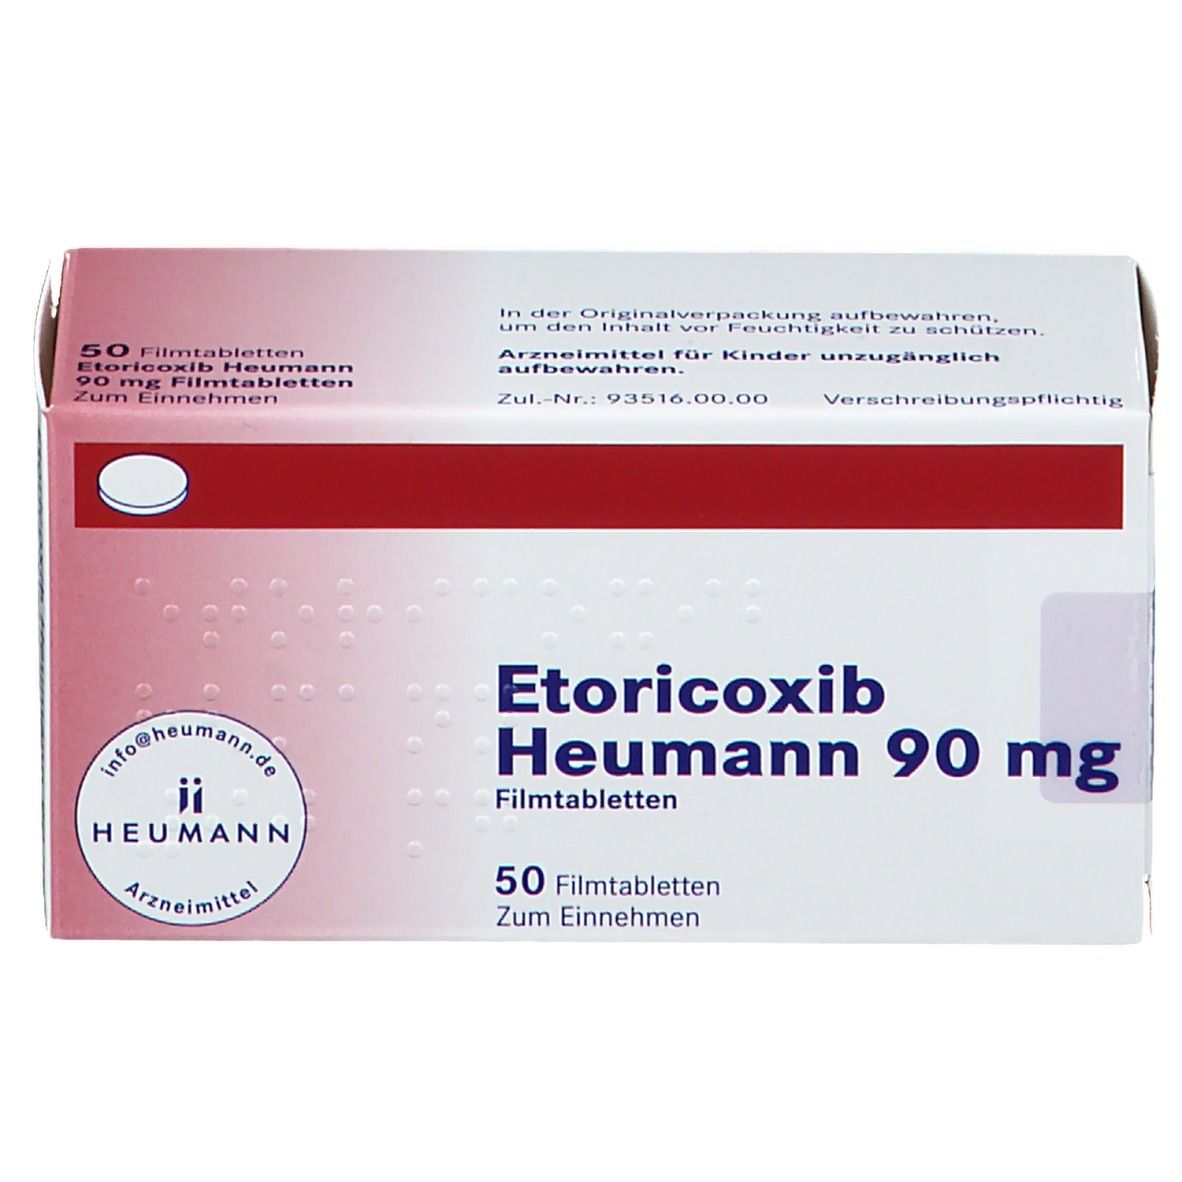 Etoricoxib Heumann 90 mg